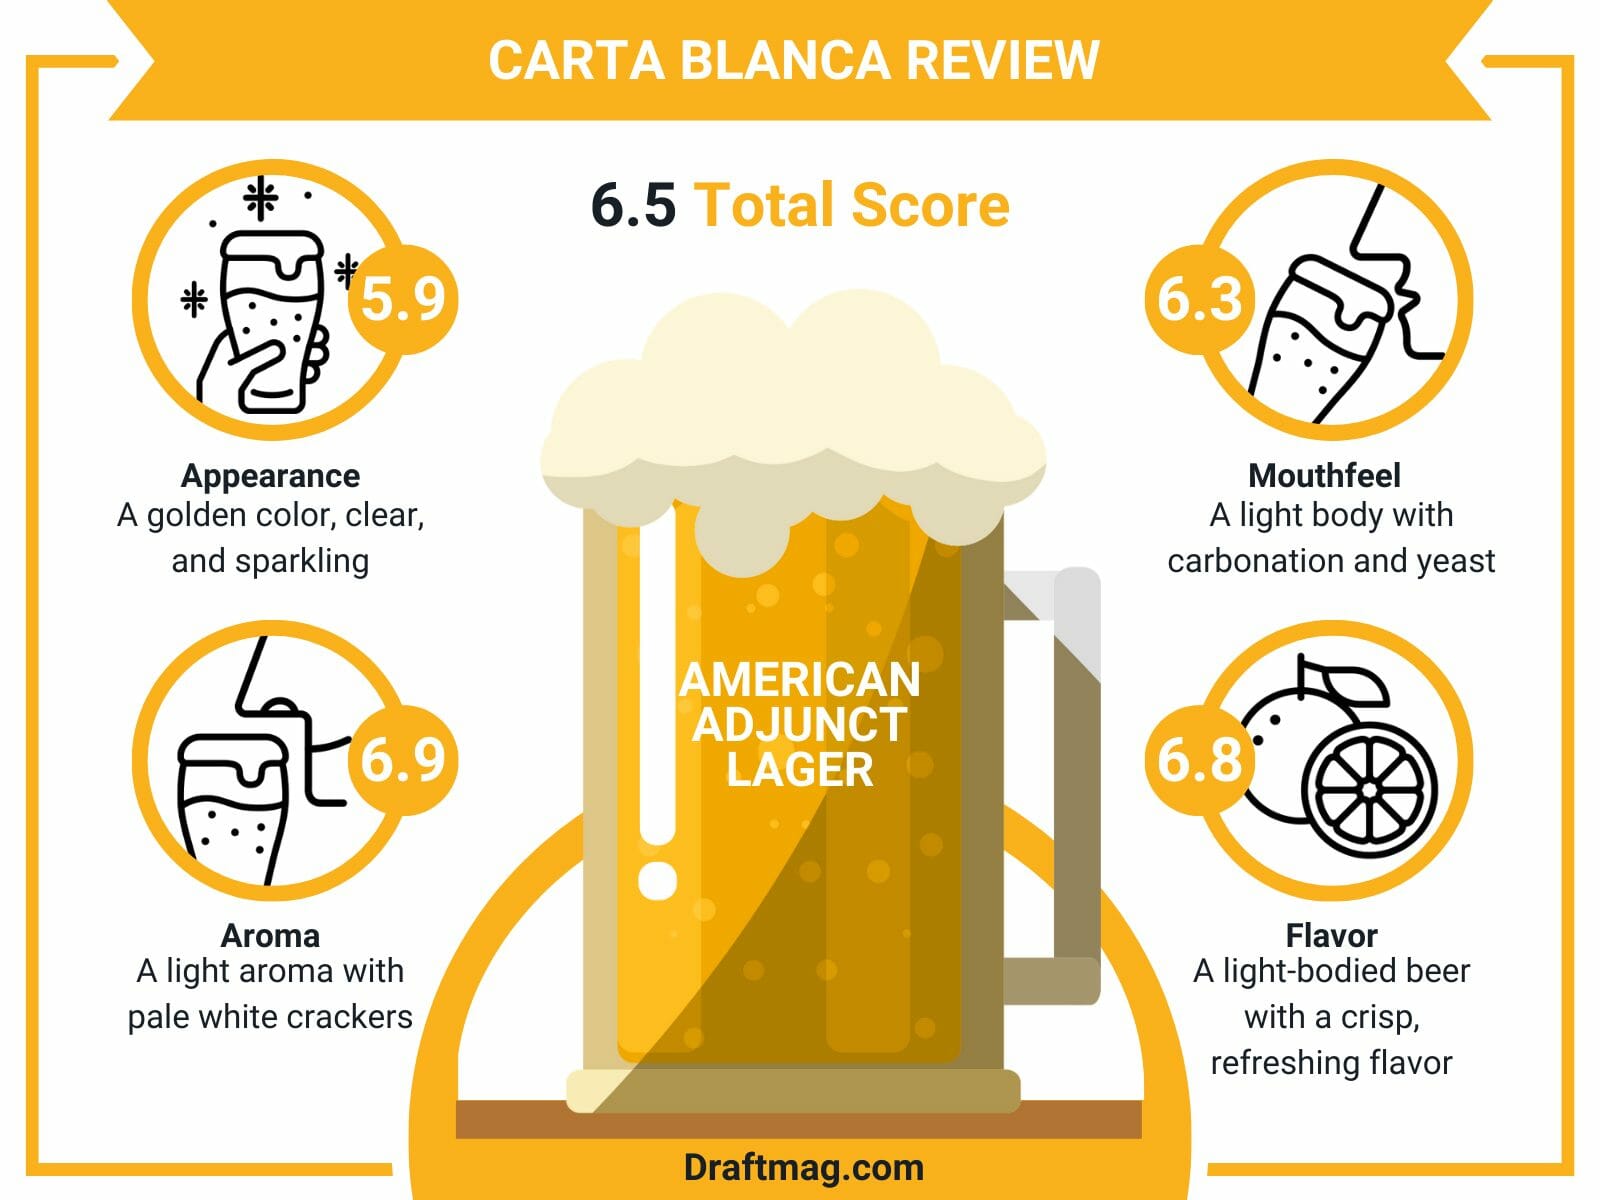 Carta blanca review infographic